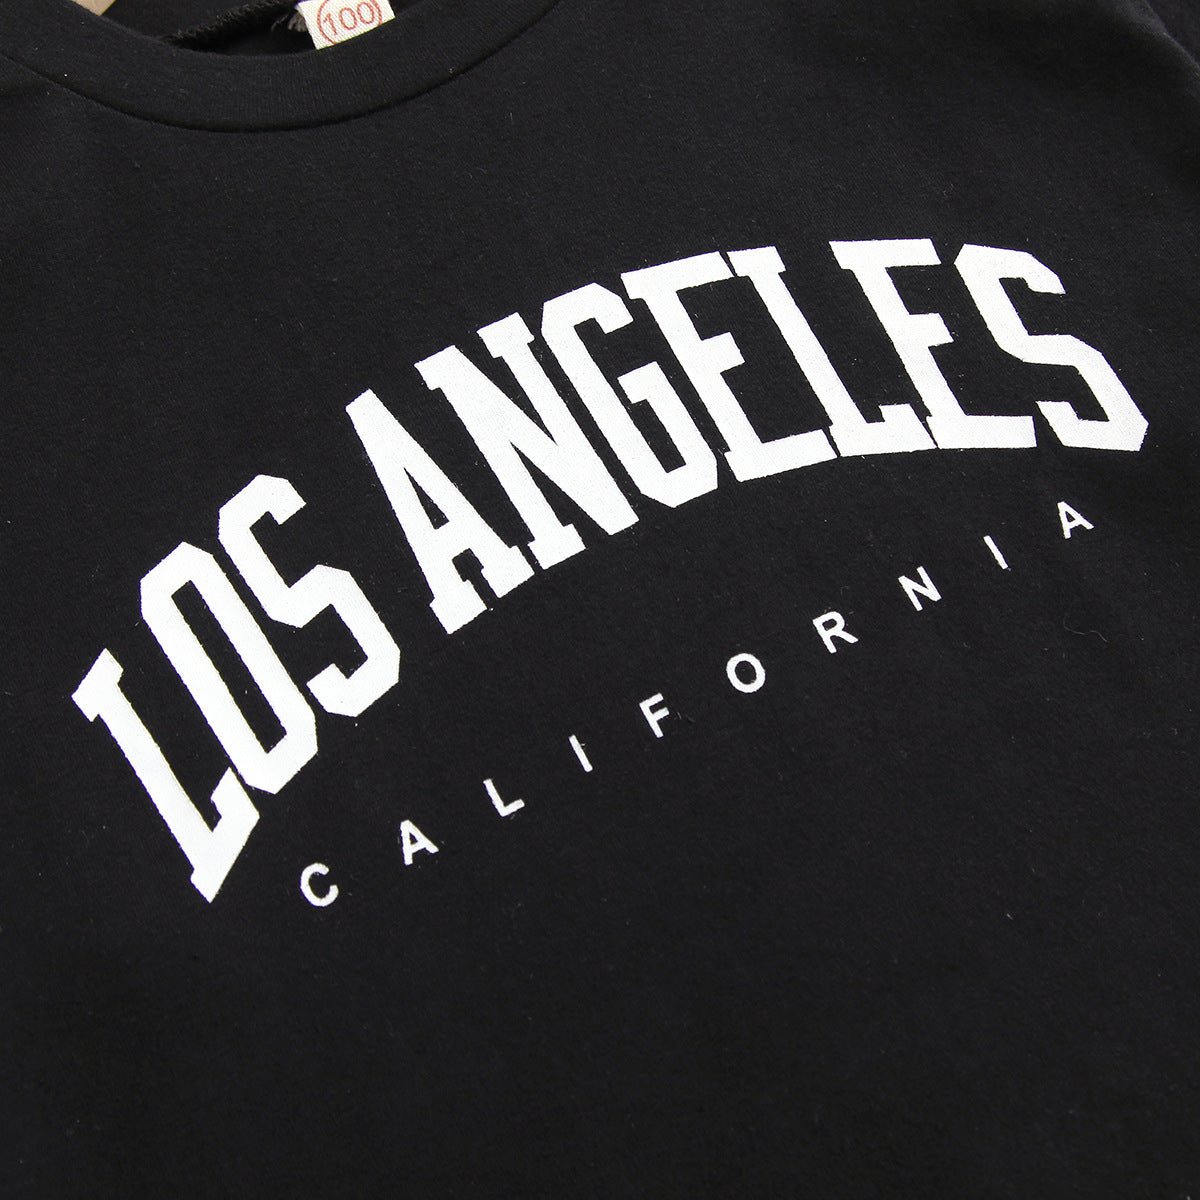 LOS ANGELES Print Top & Leather Skirt Set